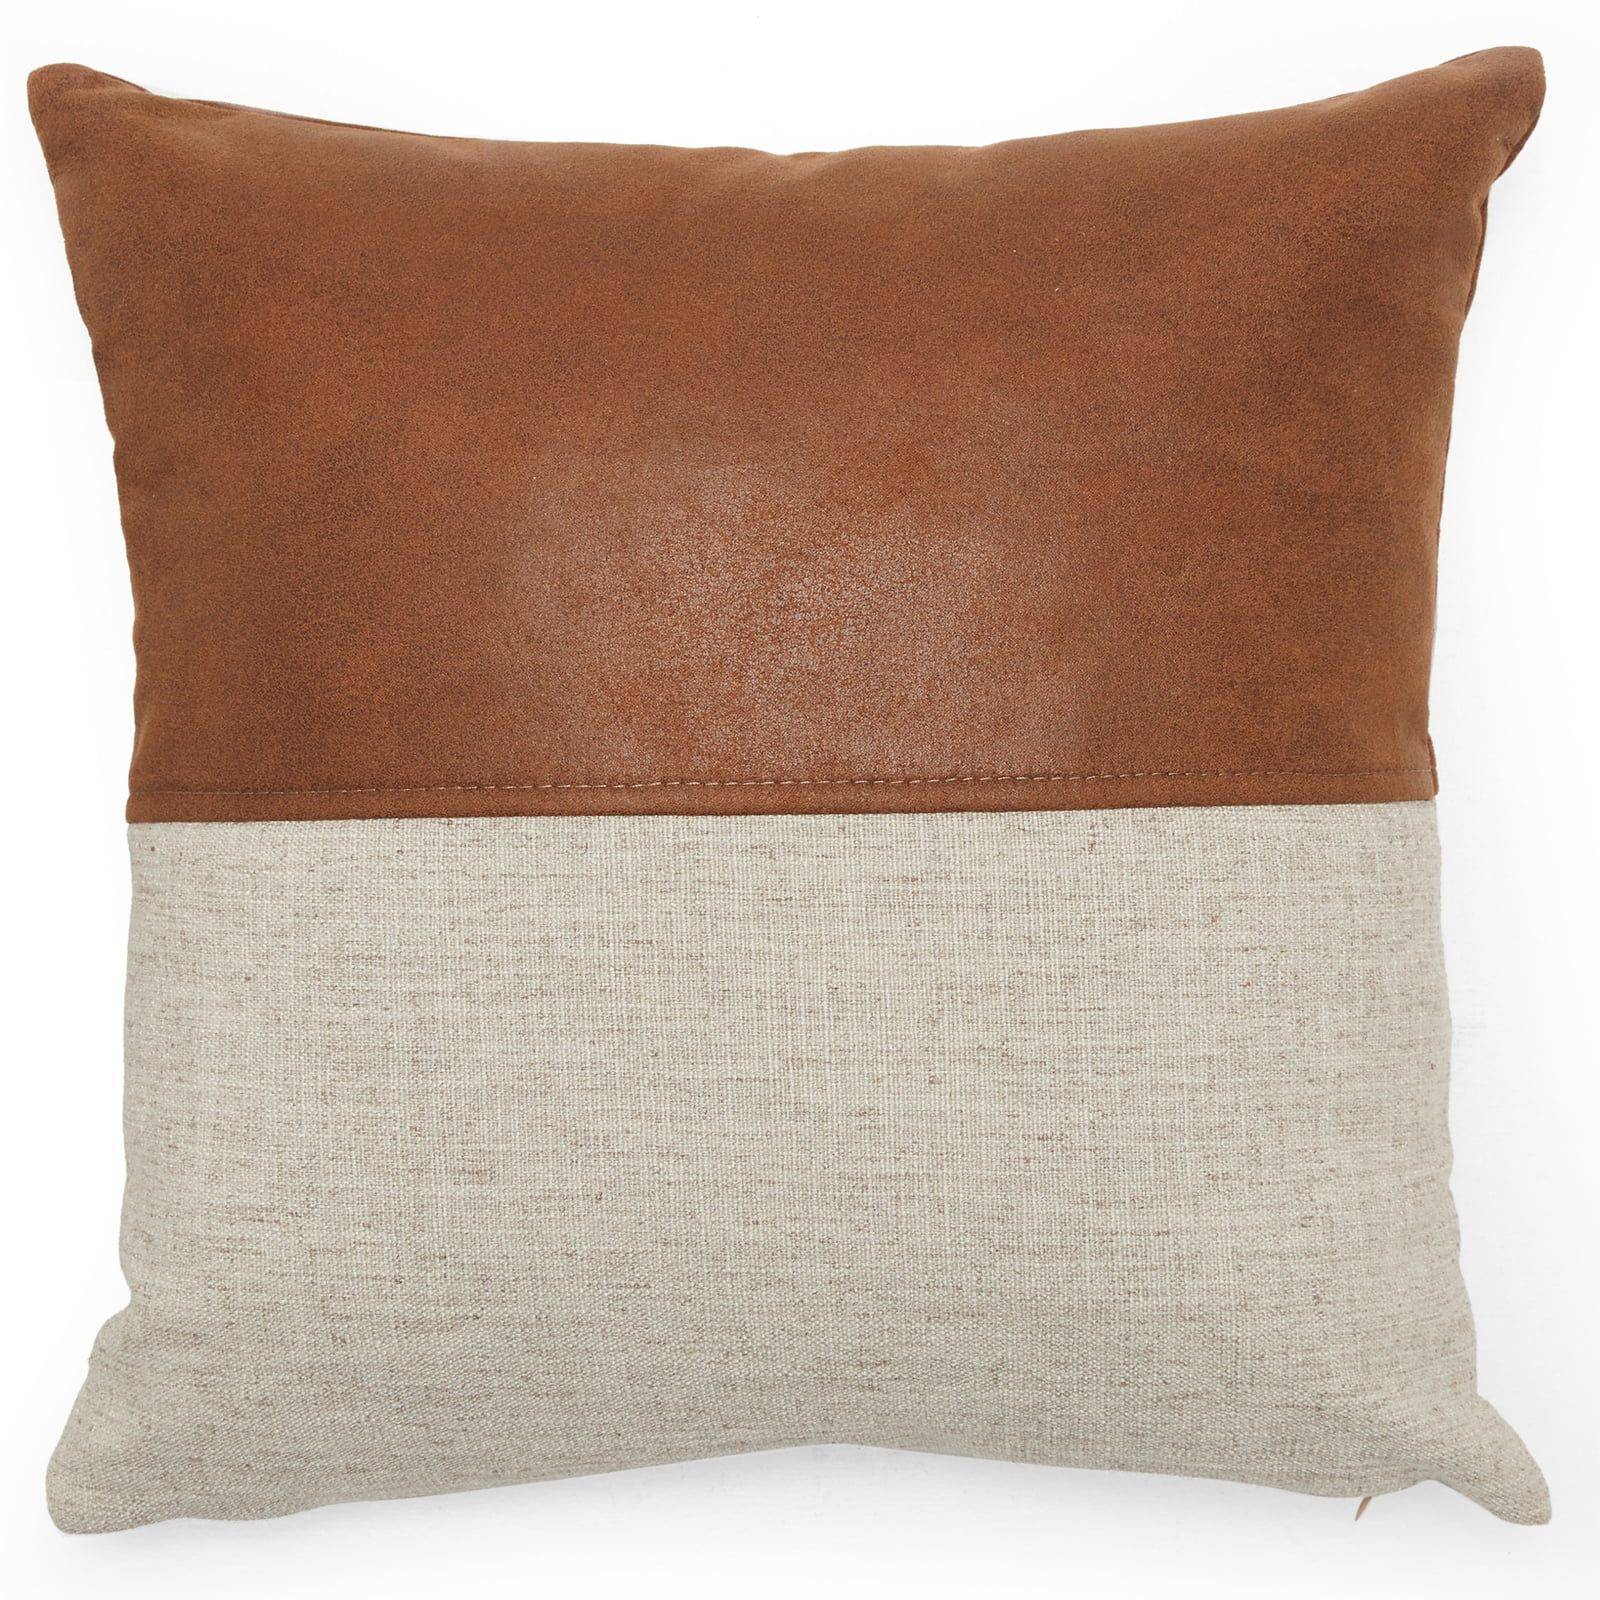 MoDRN Industrial Mixed Material Decorative Throw Pillow, 16" x 16" | Walmart (US)